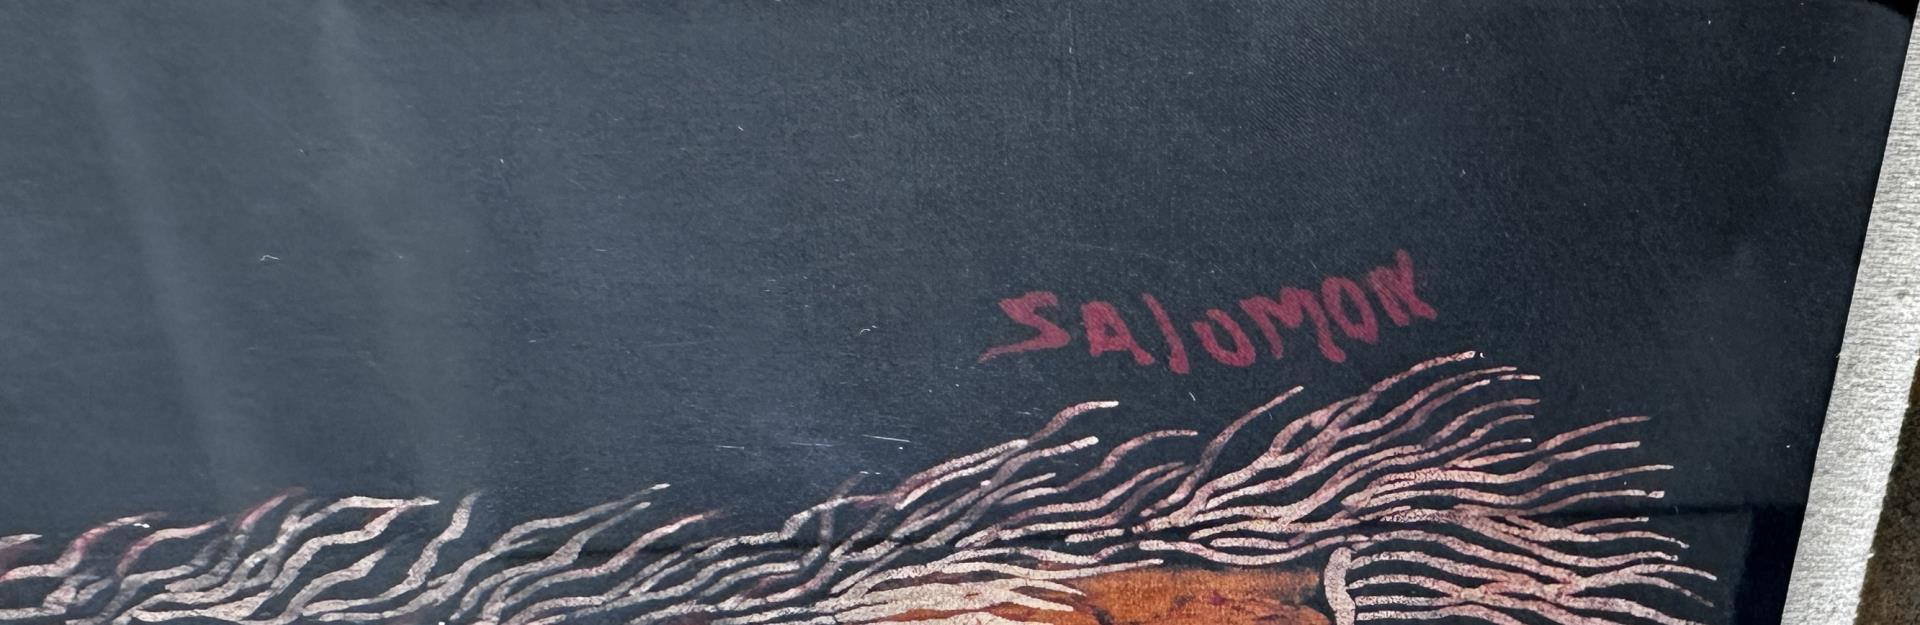 Marilyn Salomon Blackfoot Indian Batik Painting